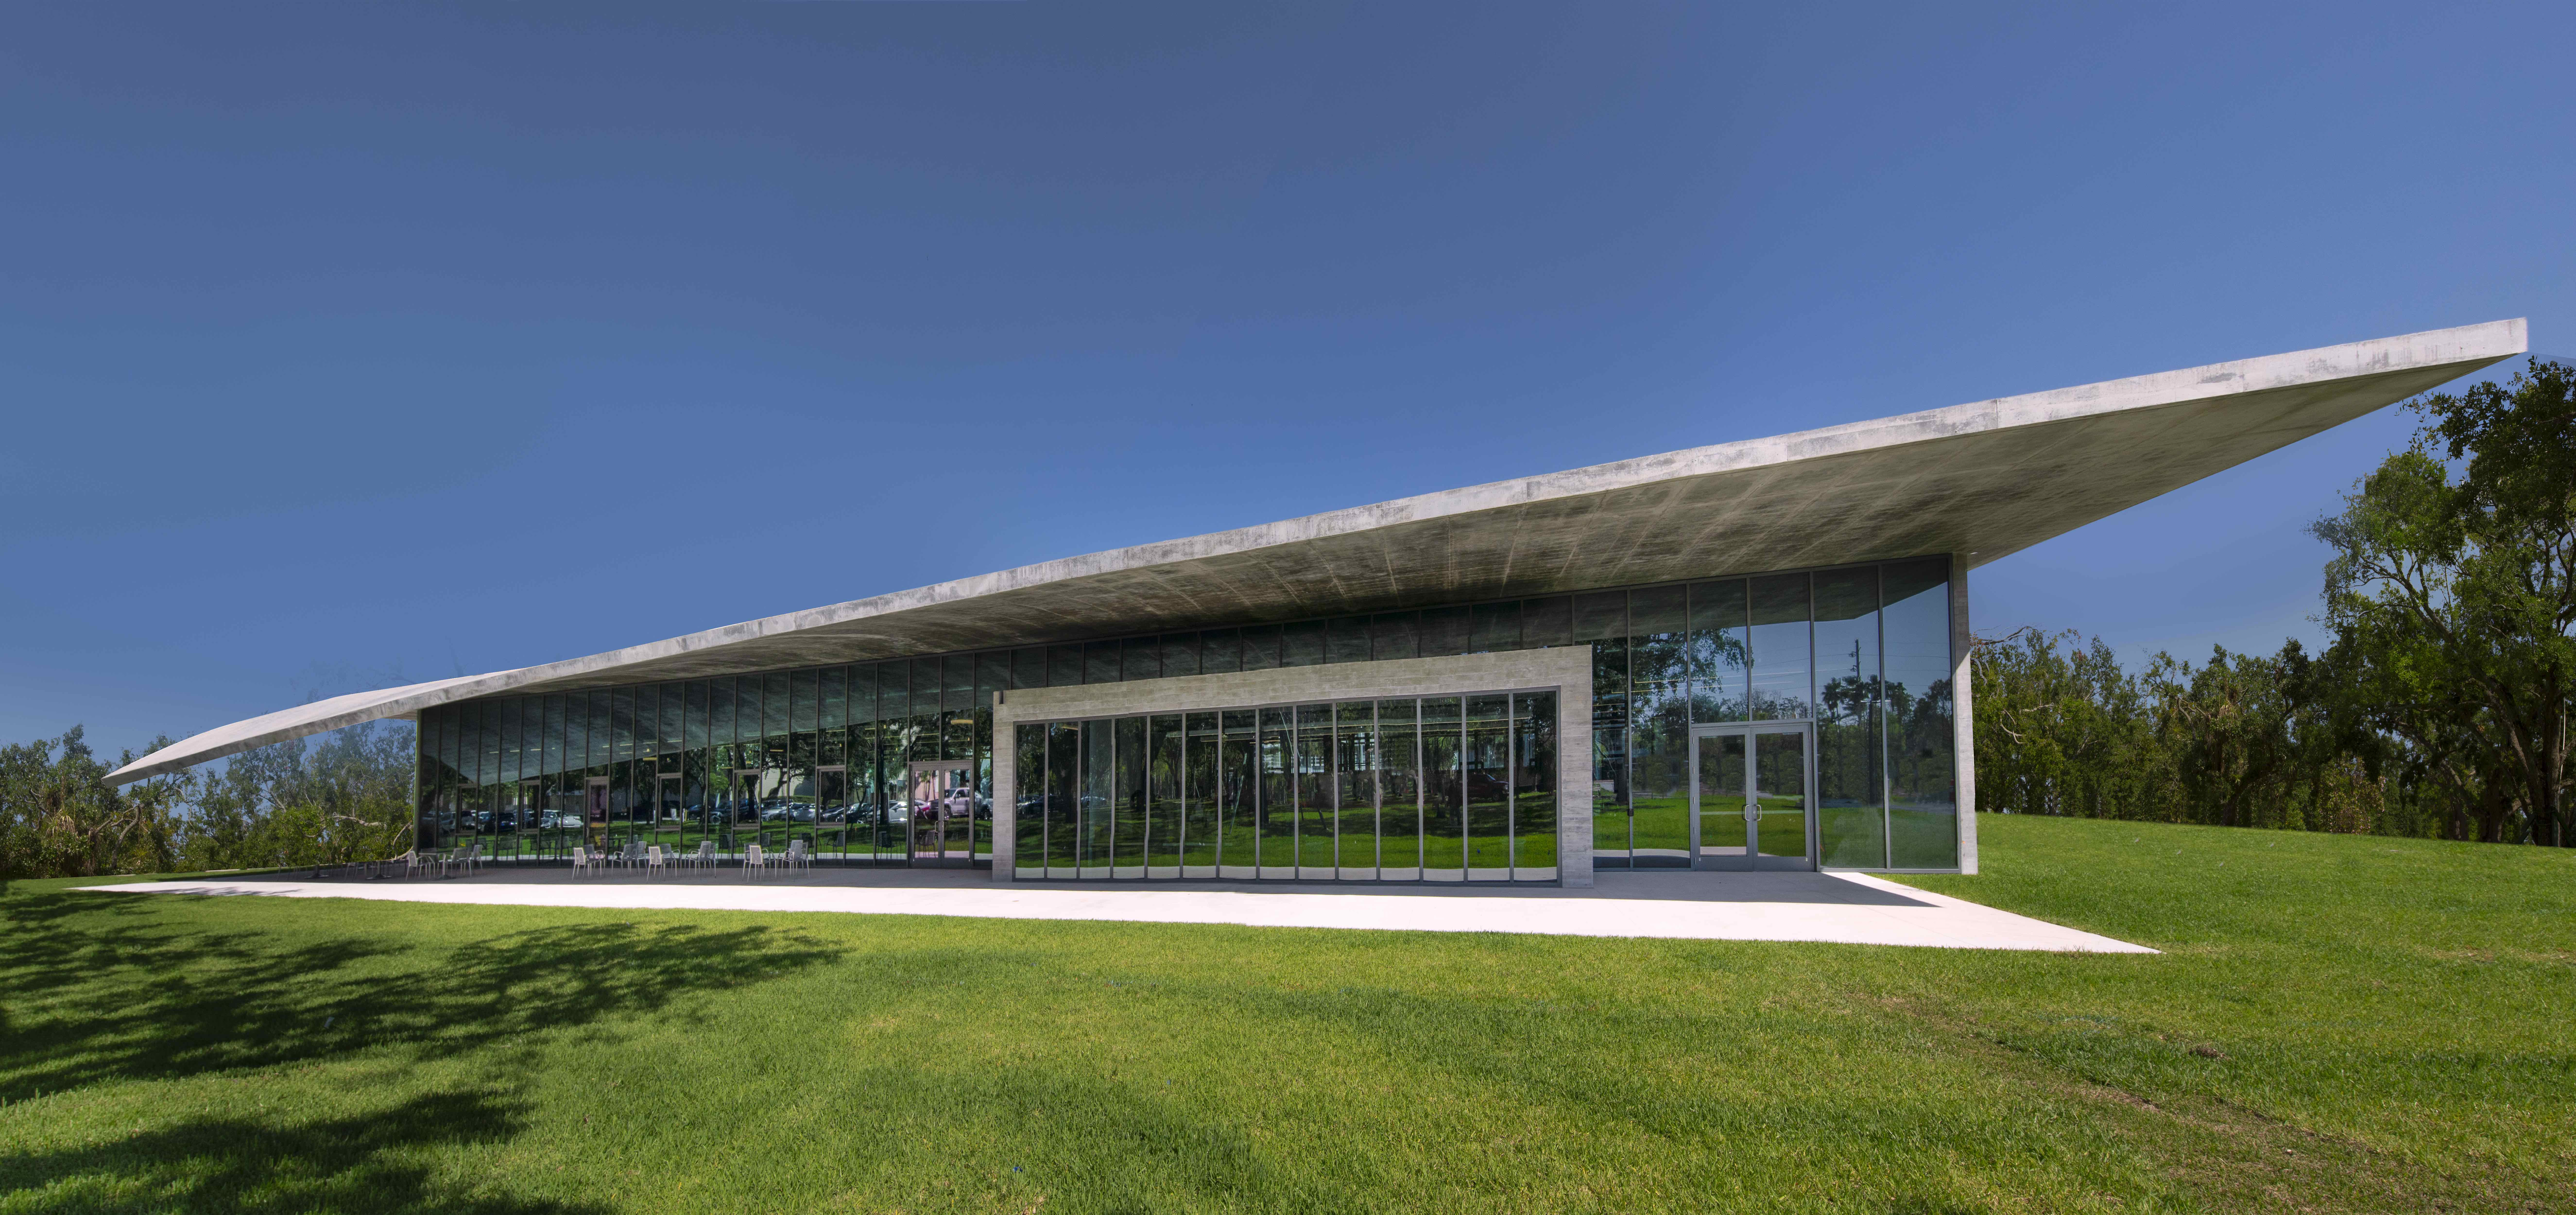 The University of Miami’s School of Architecture’s Thomas P. Murphy Design Studio Building